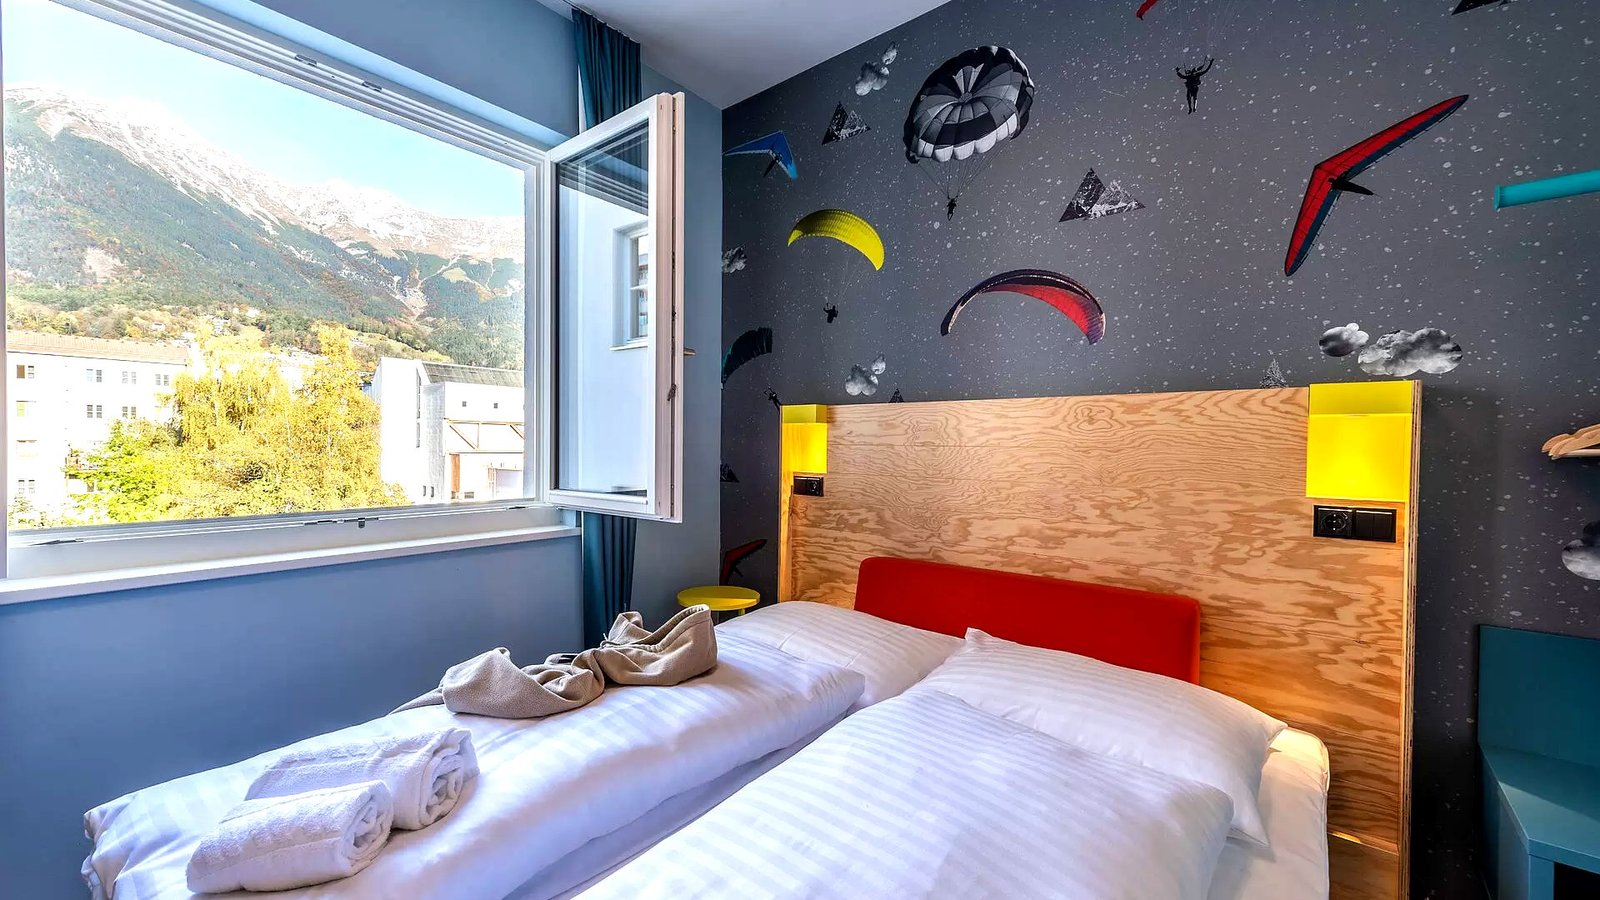 7 Best Hostels In Innsbruck, Austria